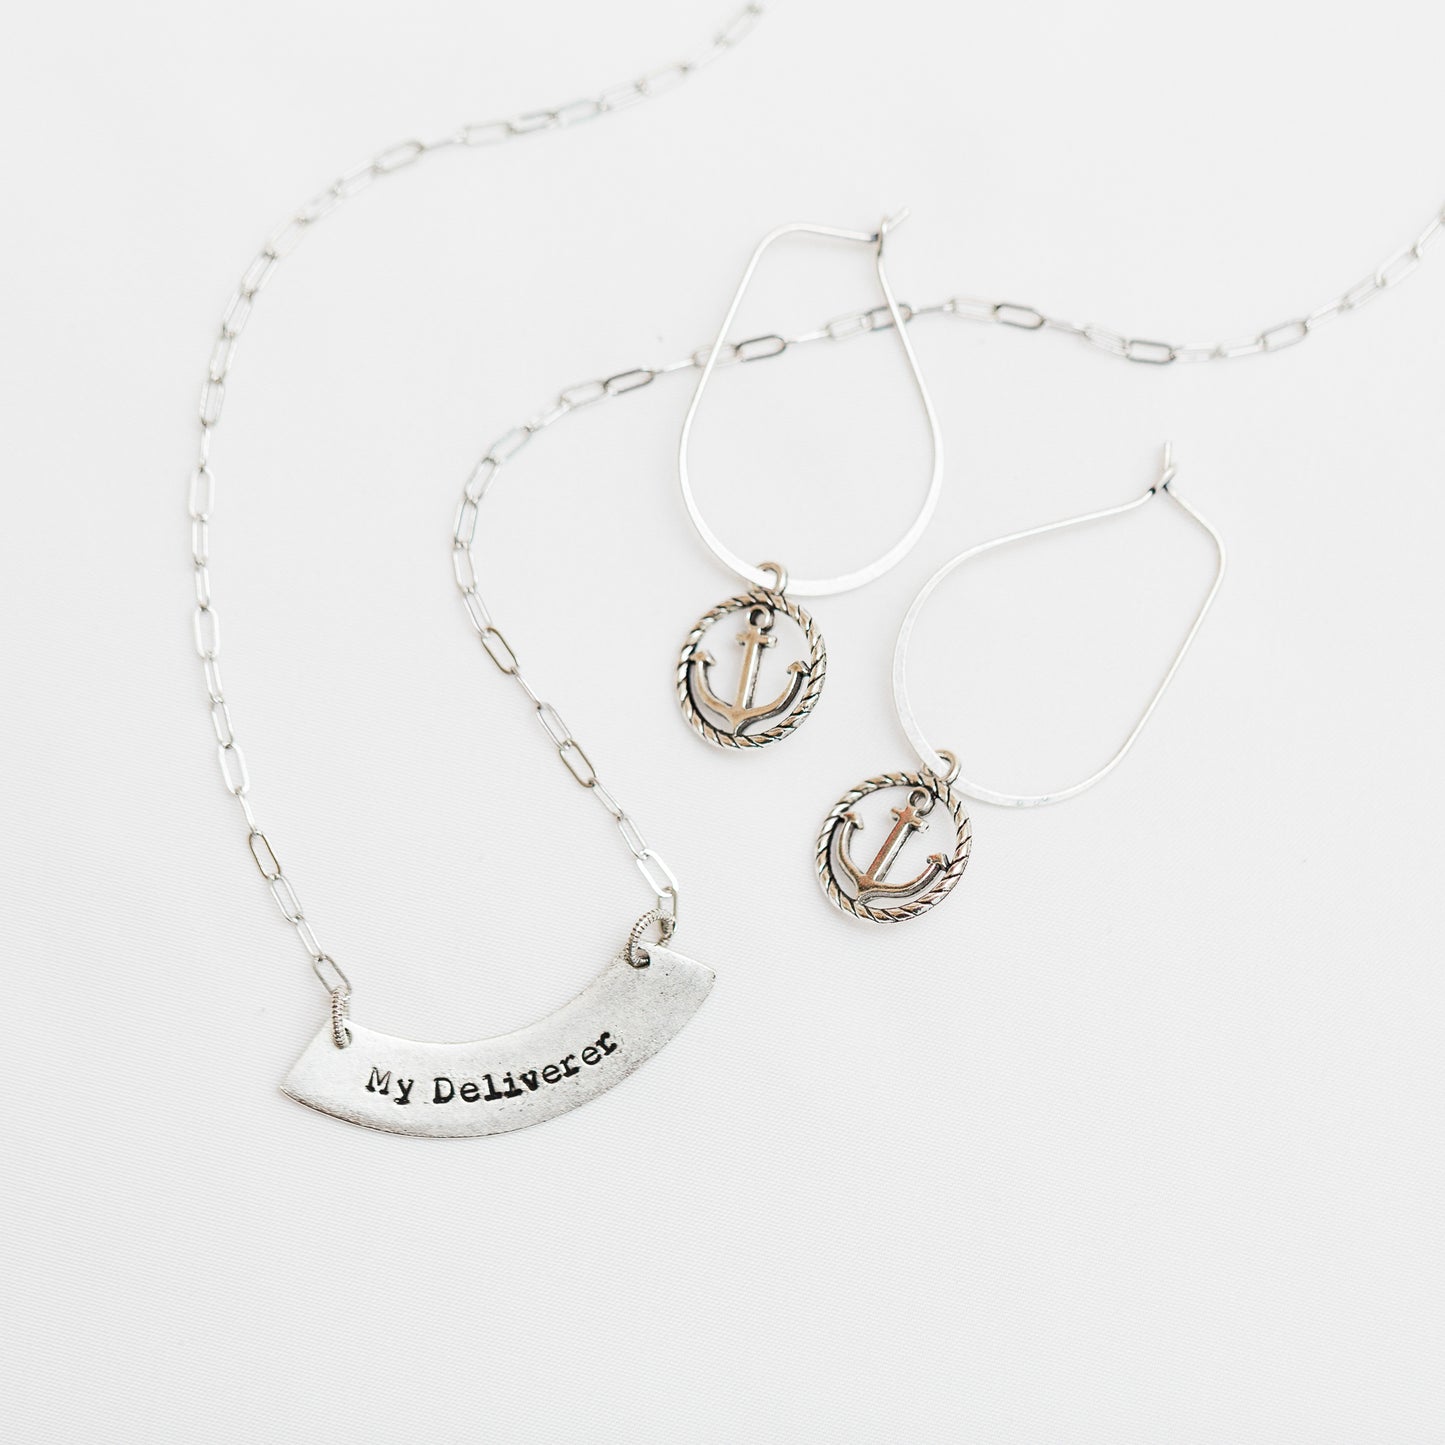 February "Deliverer of Hope" Necklace & Earrings